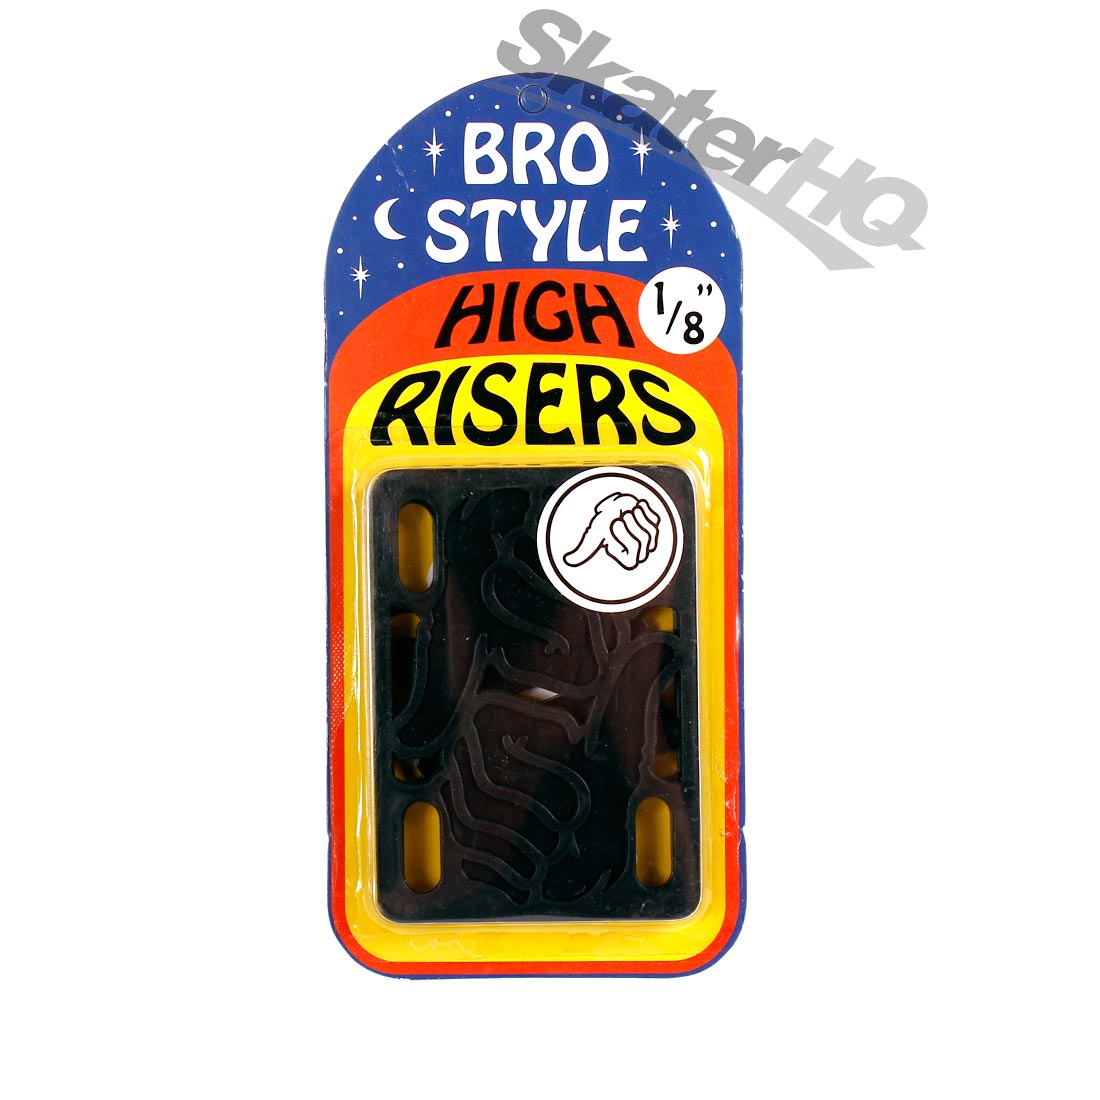 Bro Style 1/8 Hard Risers - Black Skateboard Hardware and Parts